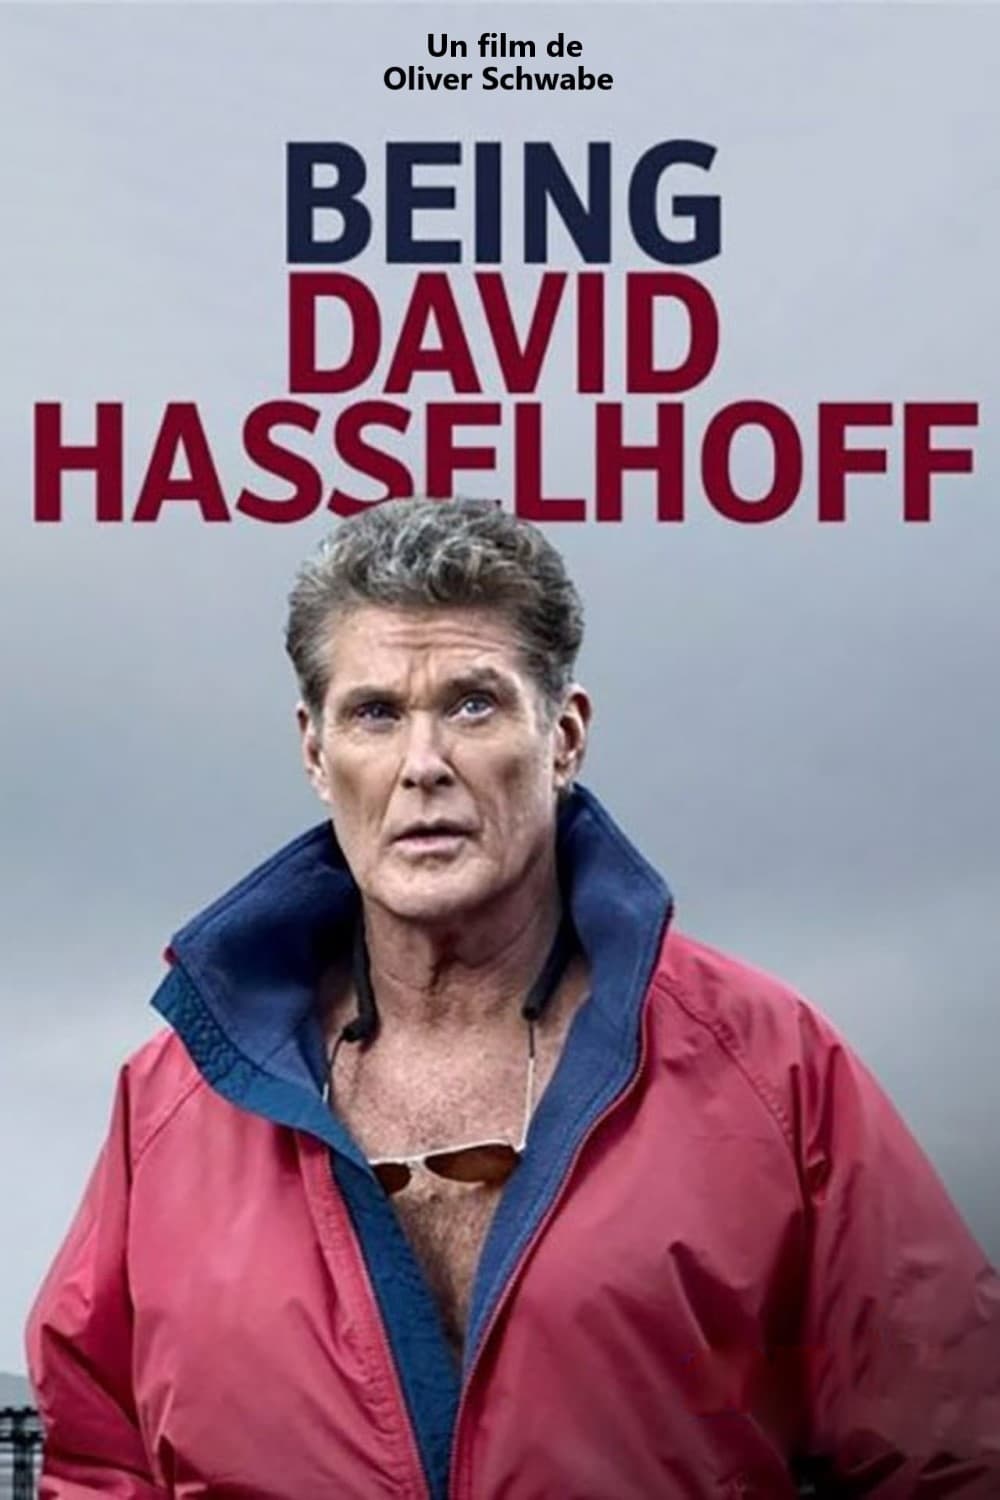 Being David Hasselhoff